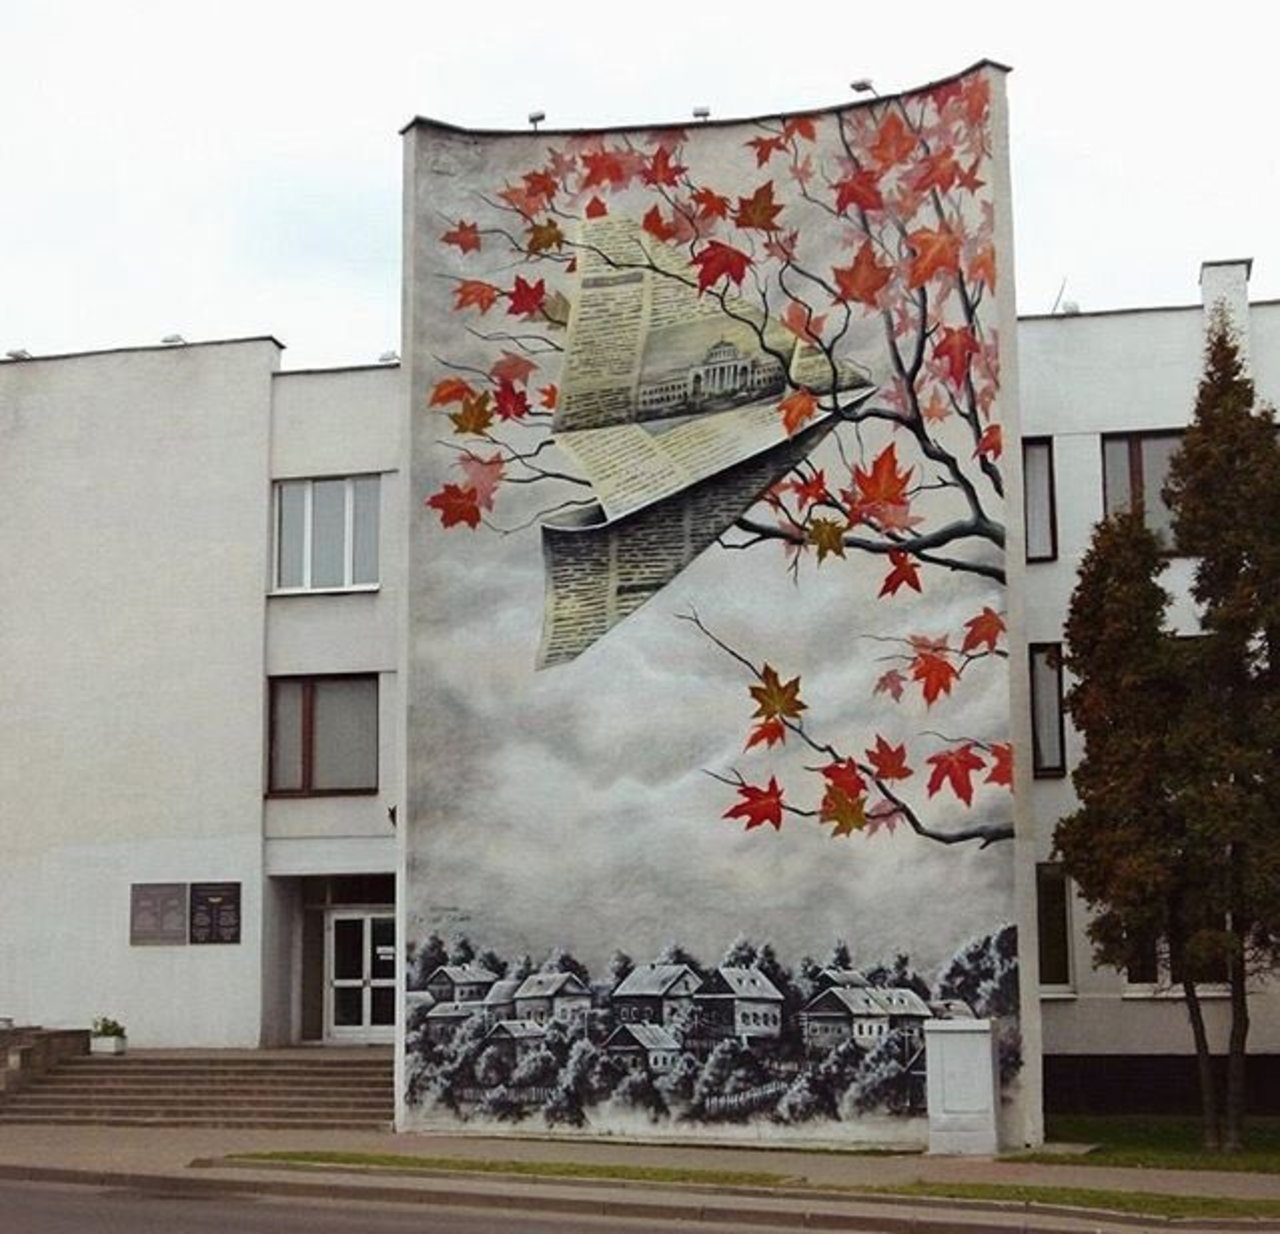 New Street Art by MUTUS in Belarus 

#art #graffiti #mural #streetart https://t.co/xVfEG2hbIB